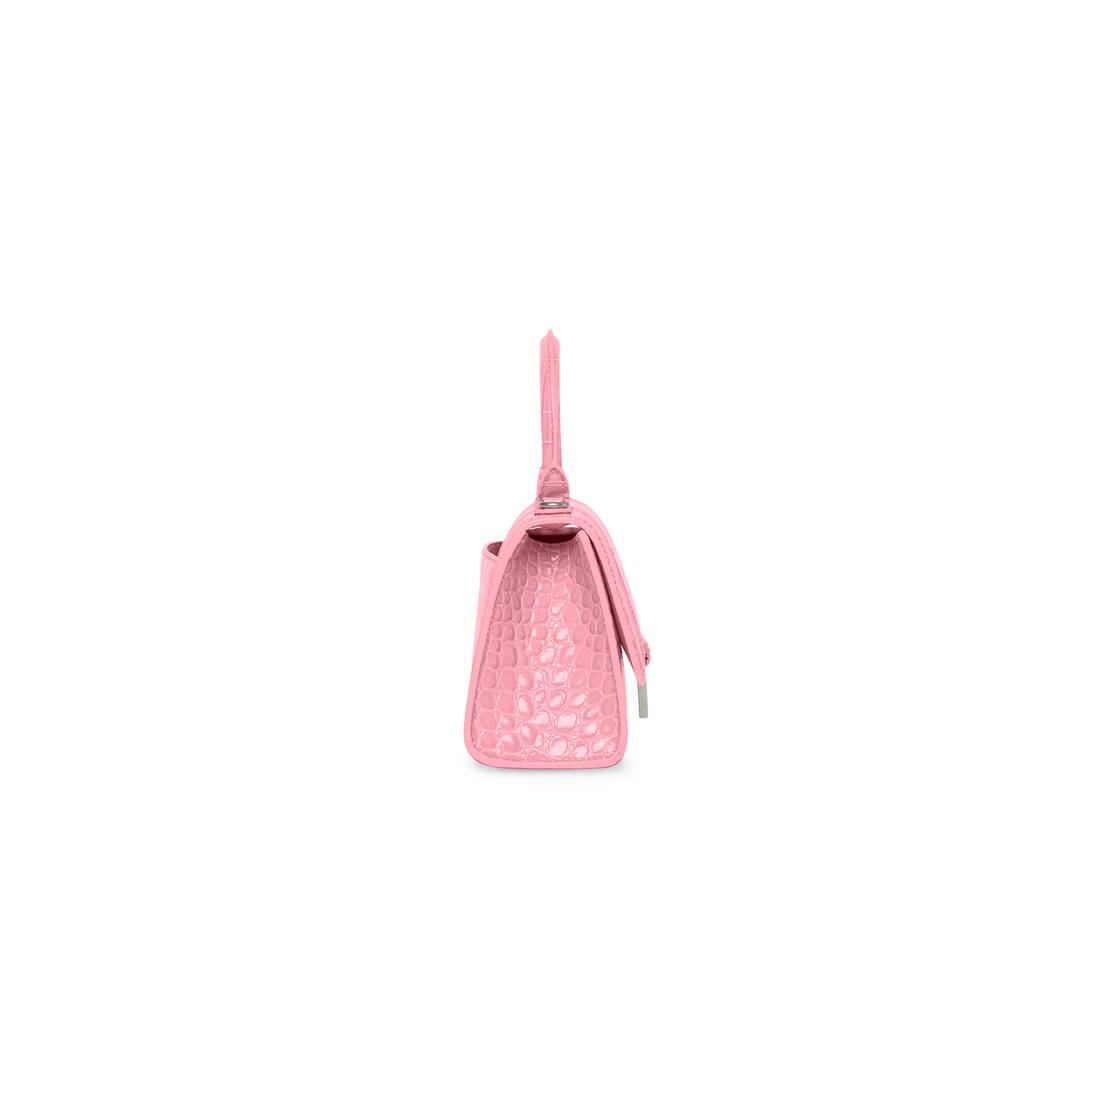 Balenciaga Graffiti Hourglass XS Handle Bag - Pink Handle Bags, Handbags -  BAL208100